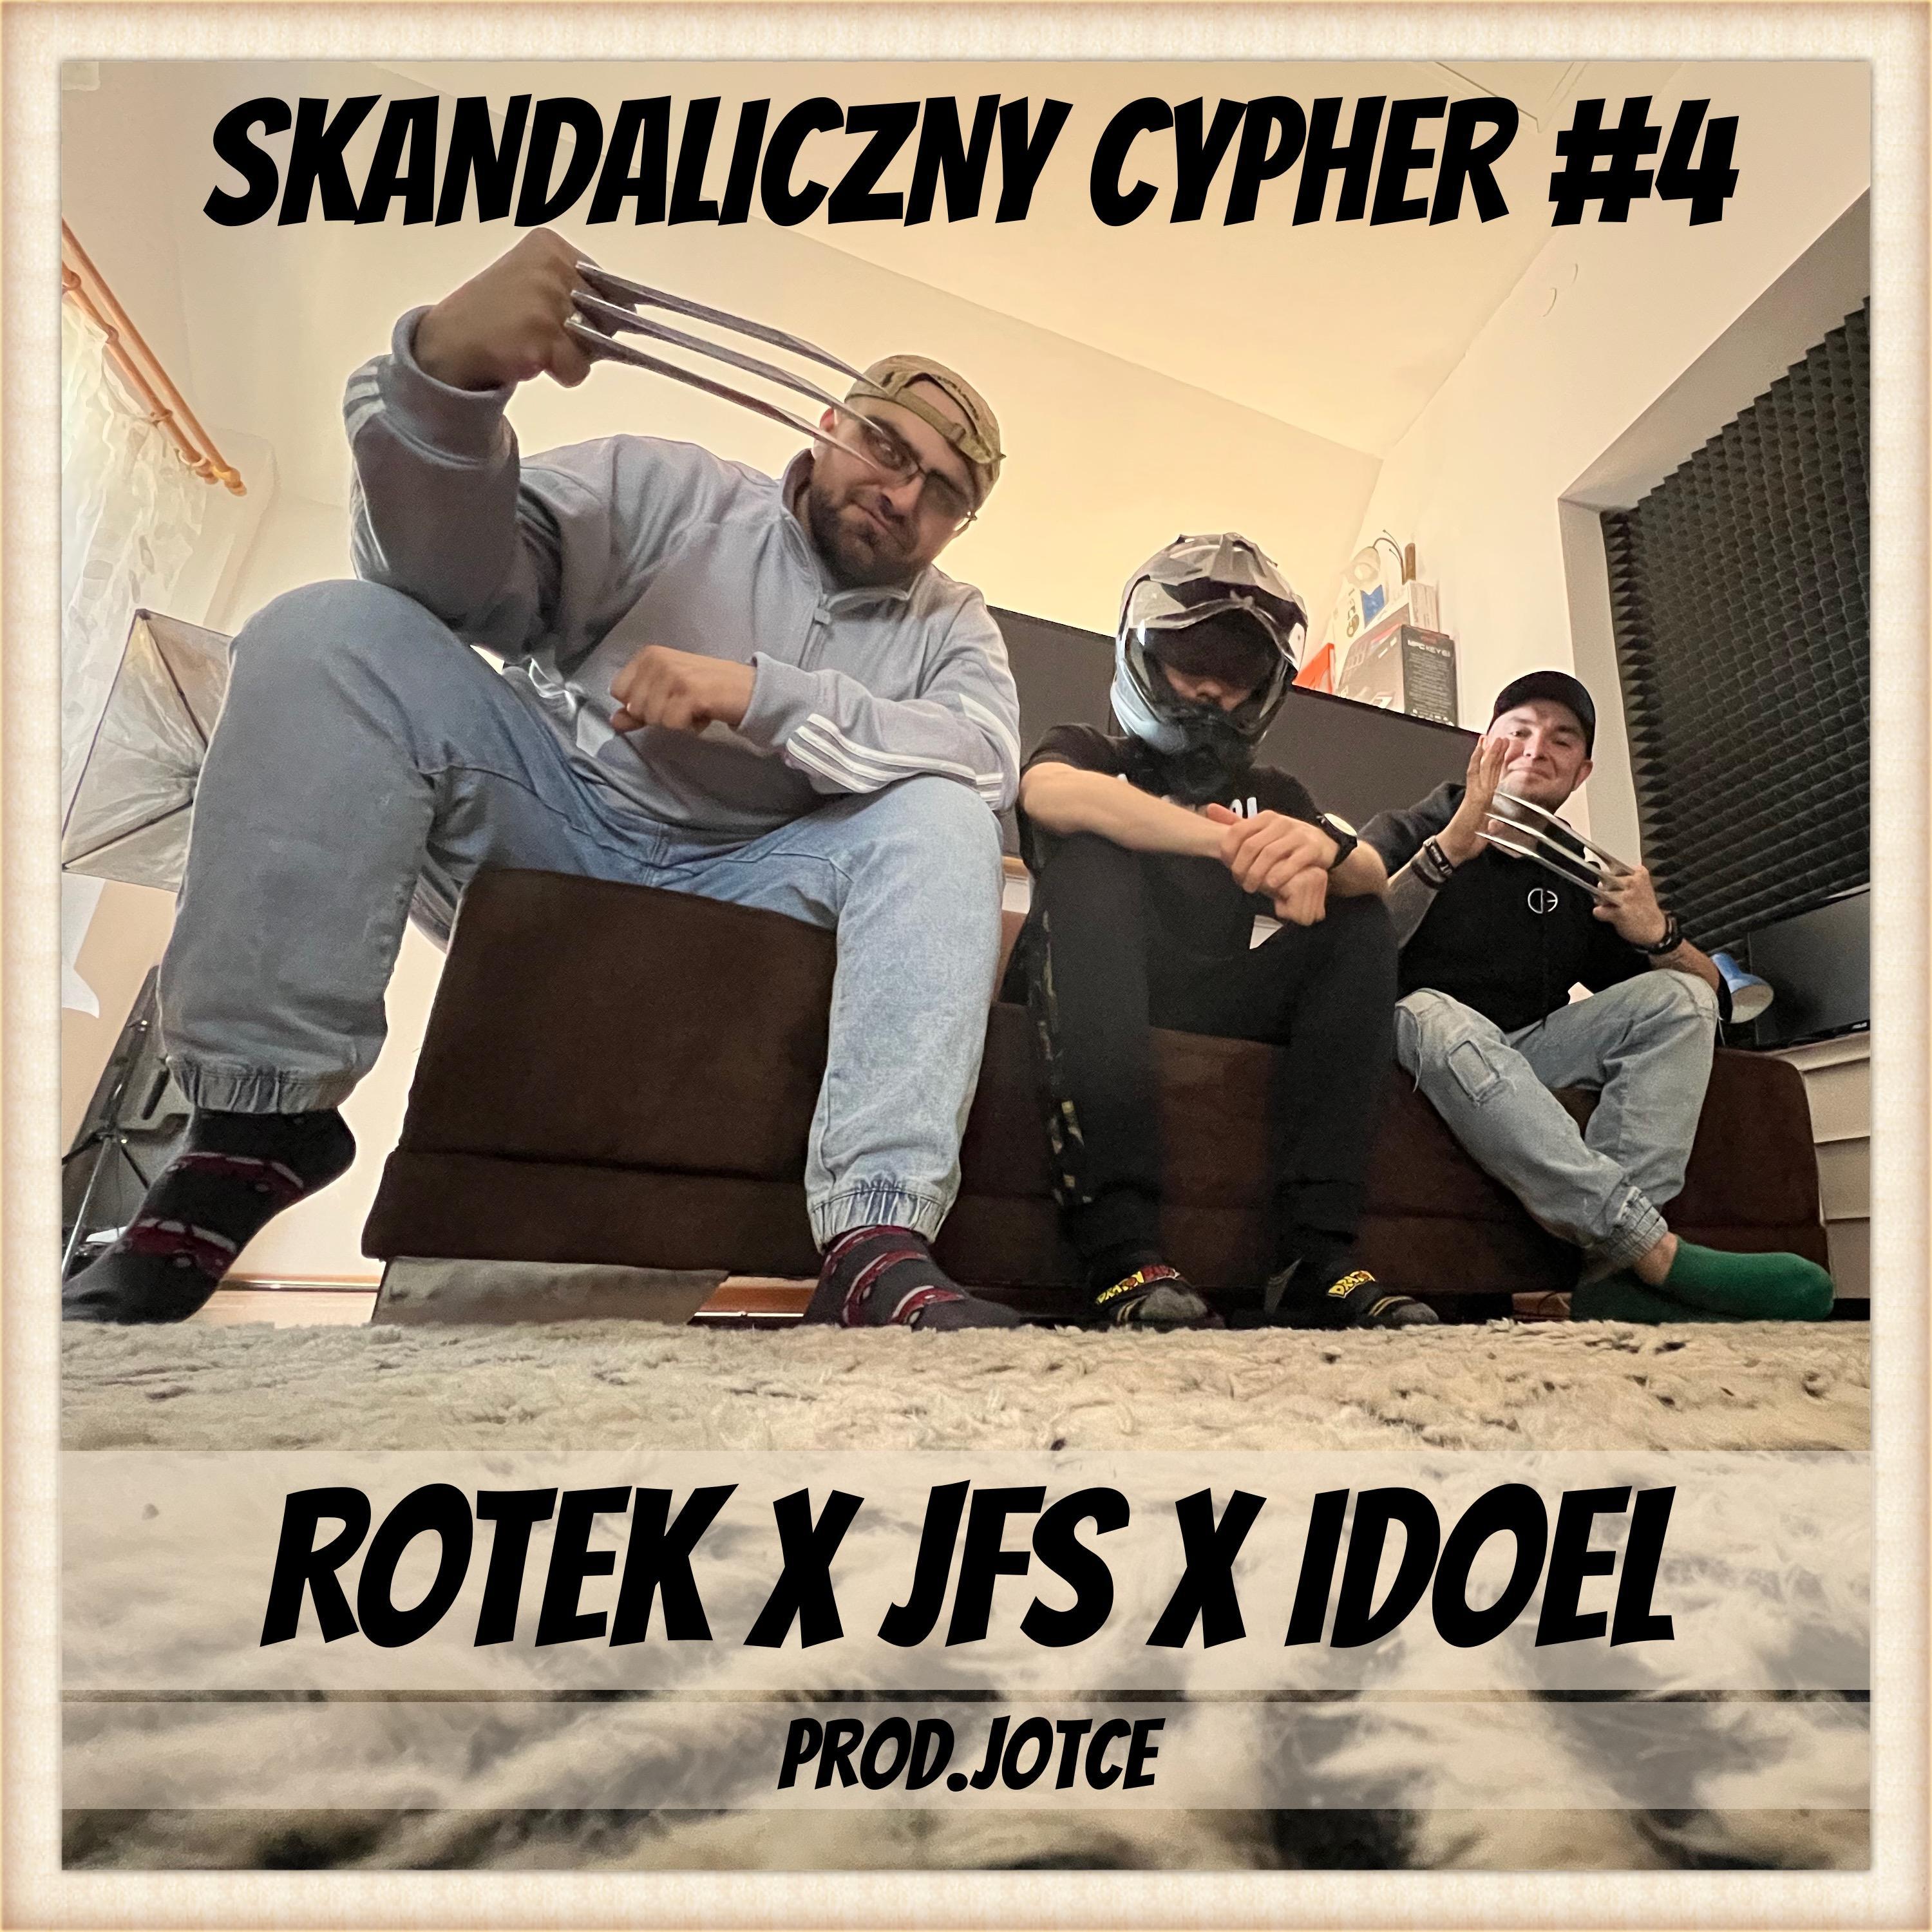 Jotu Fabek Szuszul - SkandaLiczny CYPHER #4 (feat. Rotek & IdoEL)